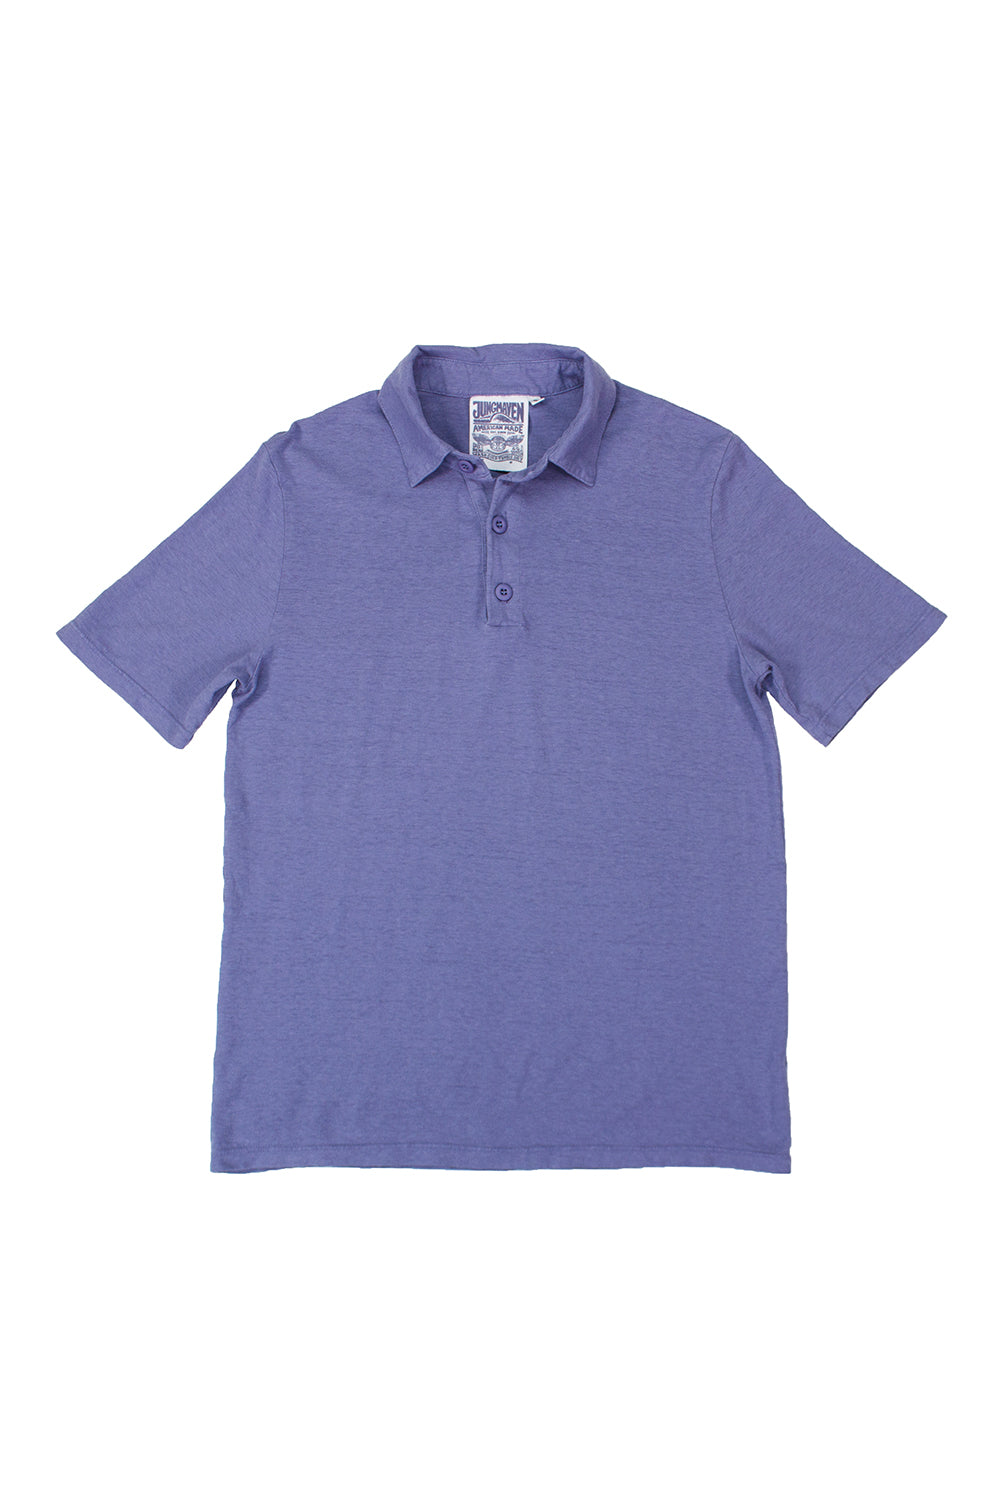 Camden Polo Shirt | Jungmaven Hemp Clothing & Accessories / Color: Lavender Violet